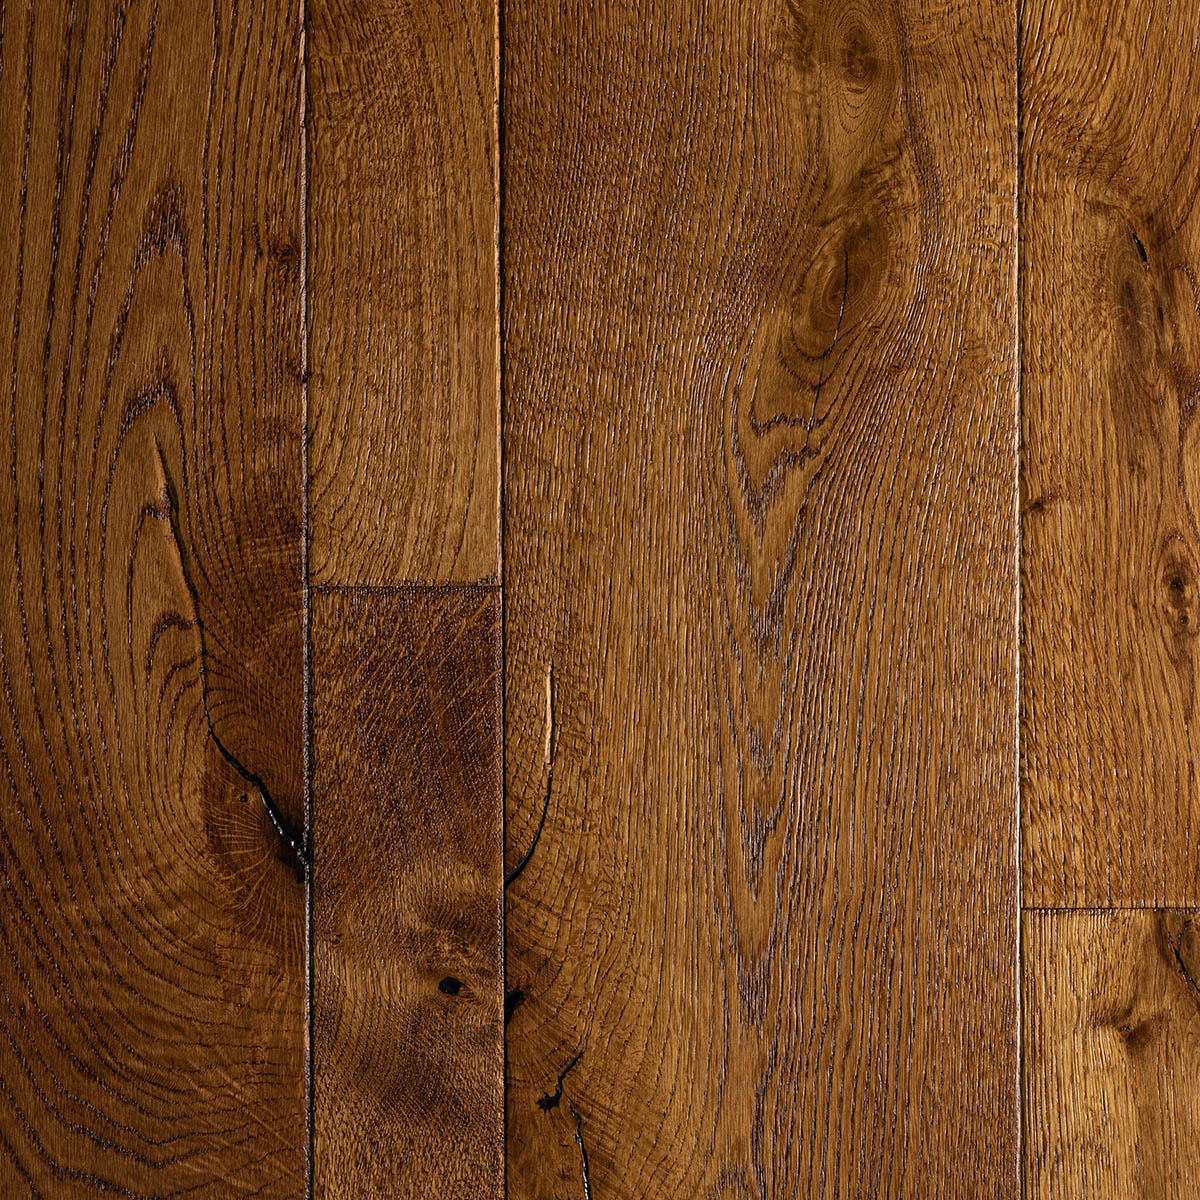 Kingswood - Brushed, Distressed Mixed Width Oak Floor